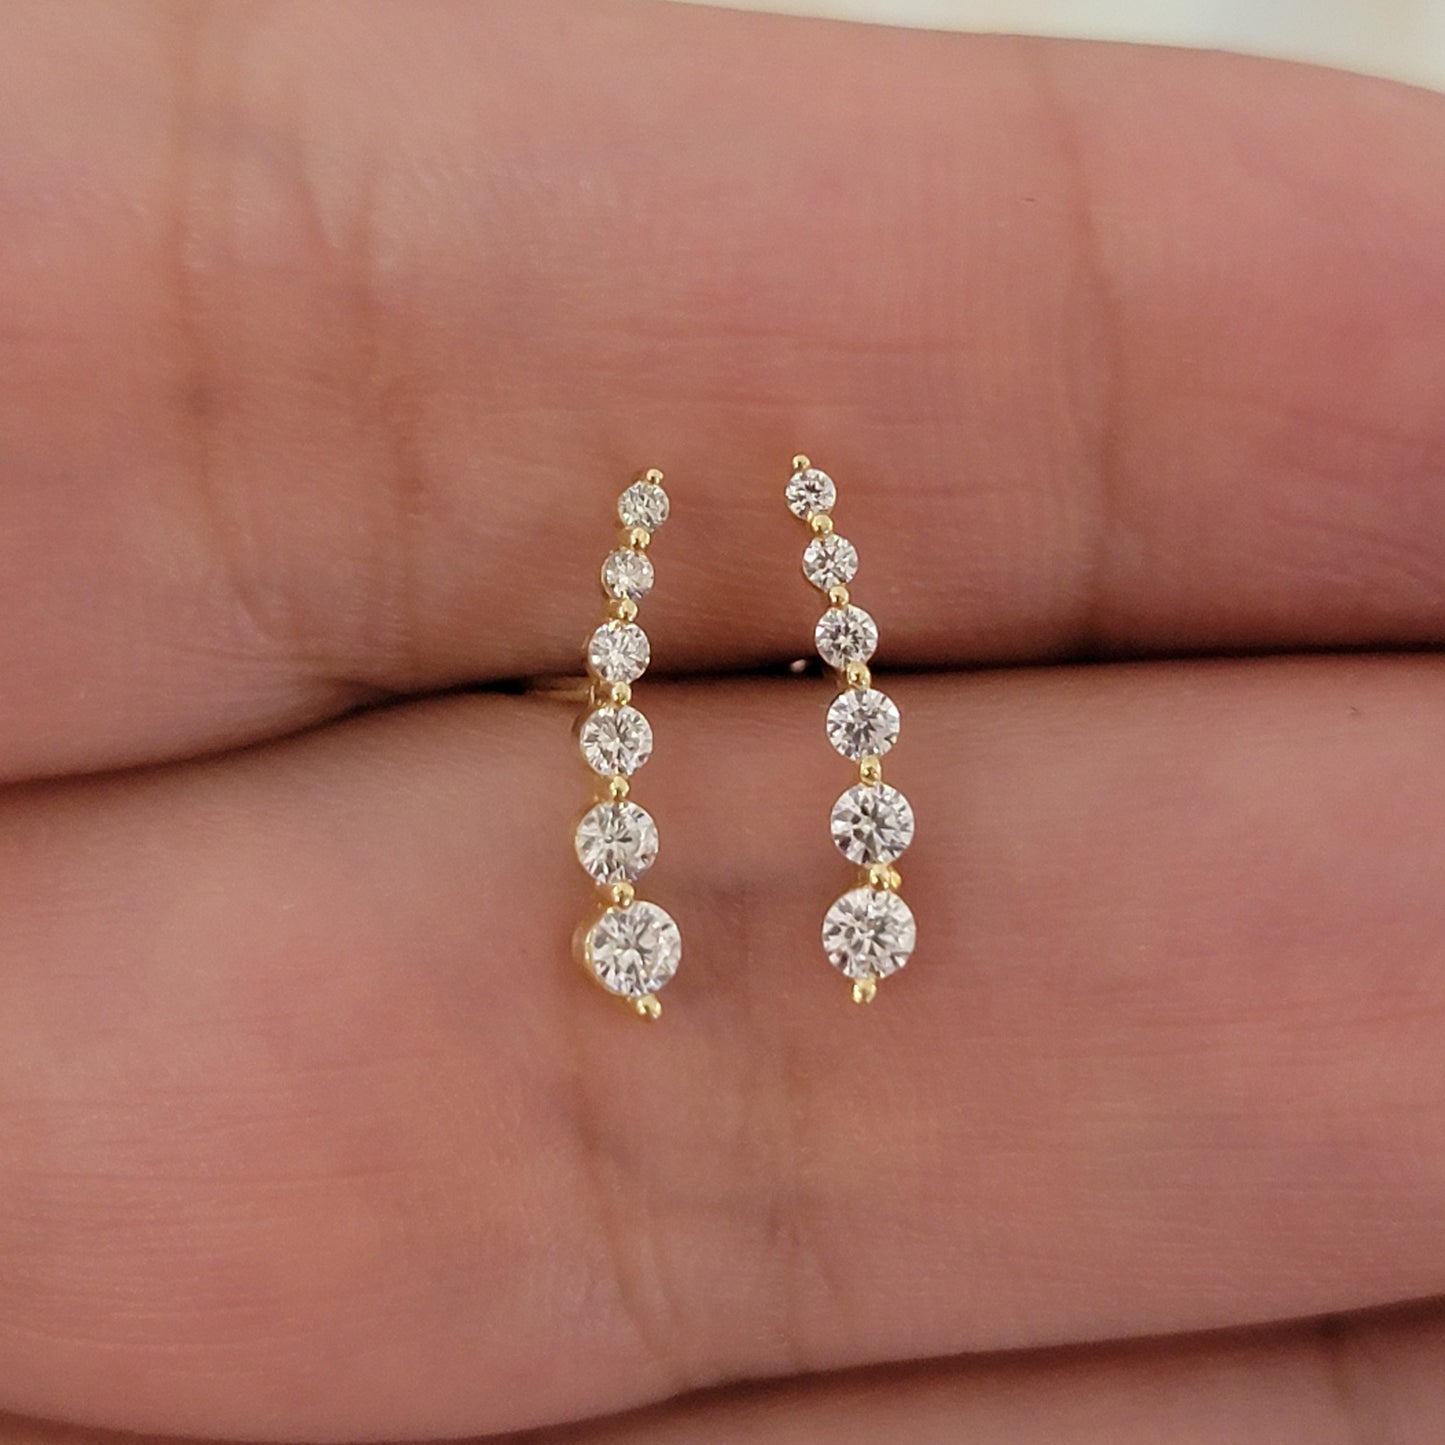 Curved Diamond Earrings in 14k Solid Gold, Natural Diamond Ear Climber Earrings